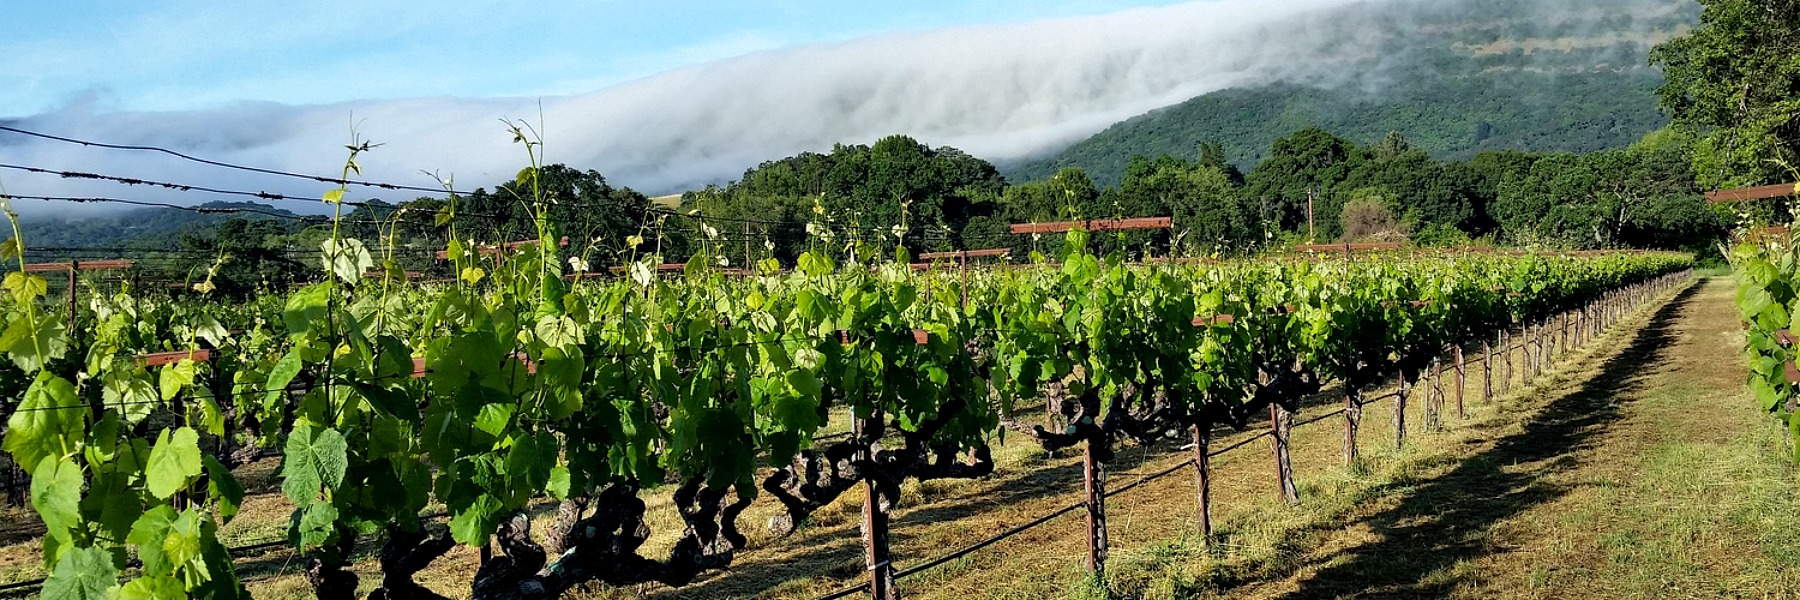 Outer Space Wine Blogs Vineyard Shot Rancho Chimiles Vineyard